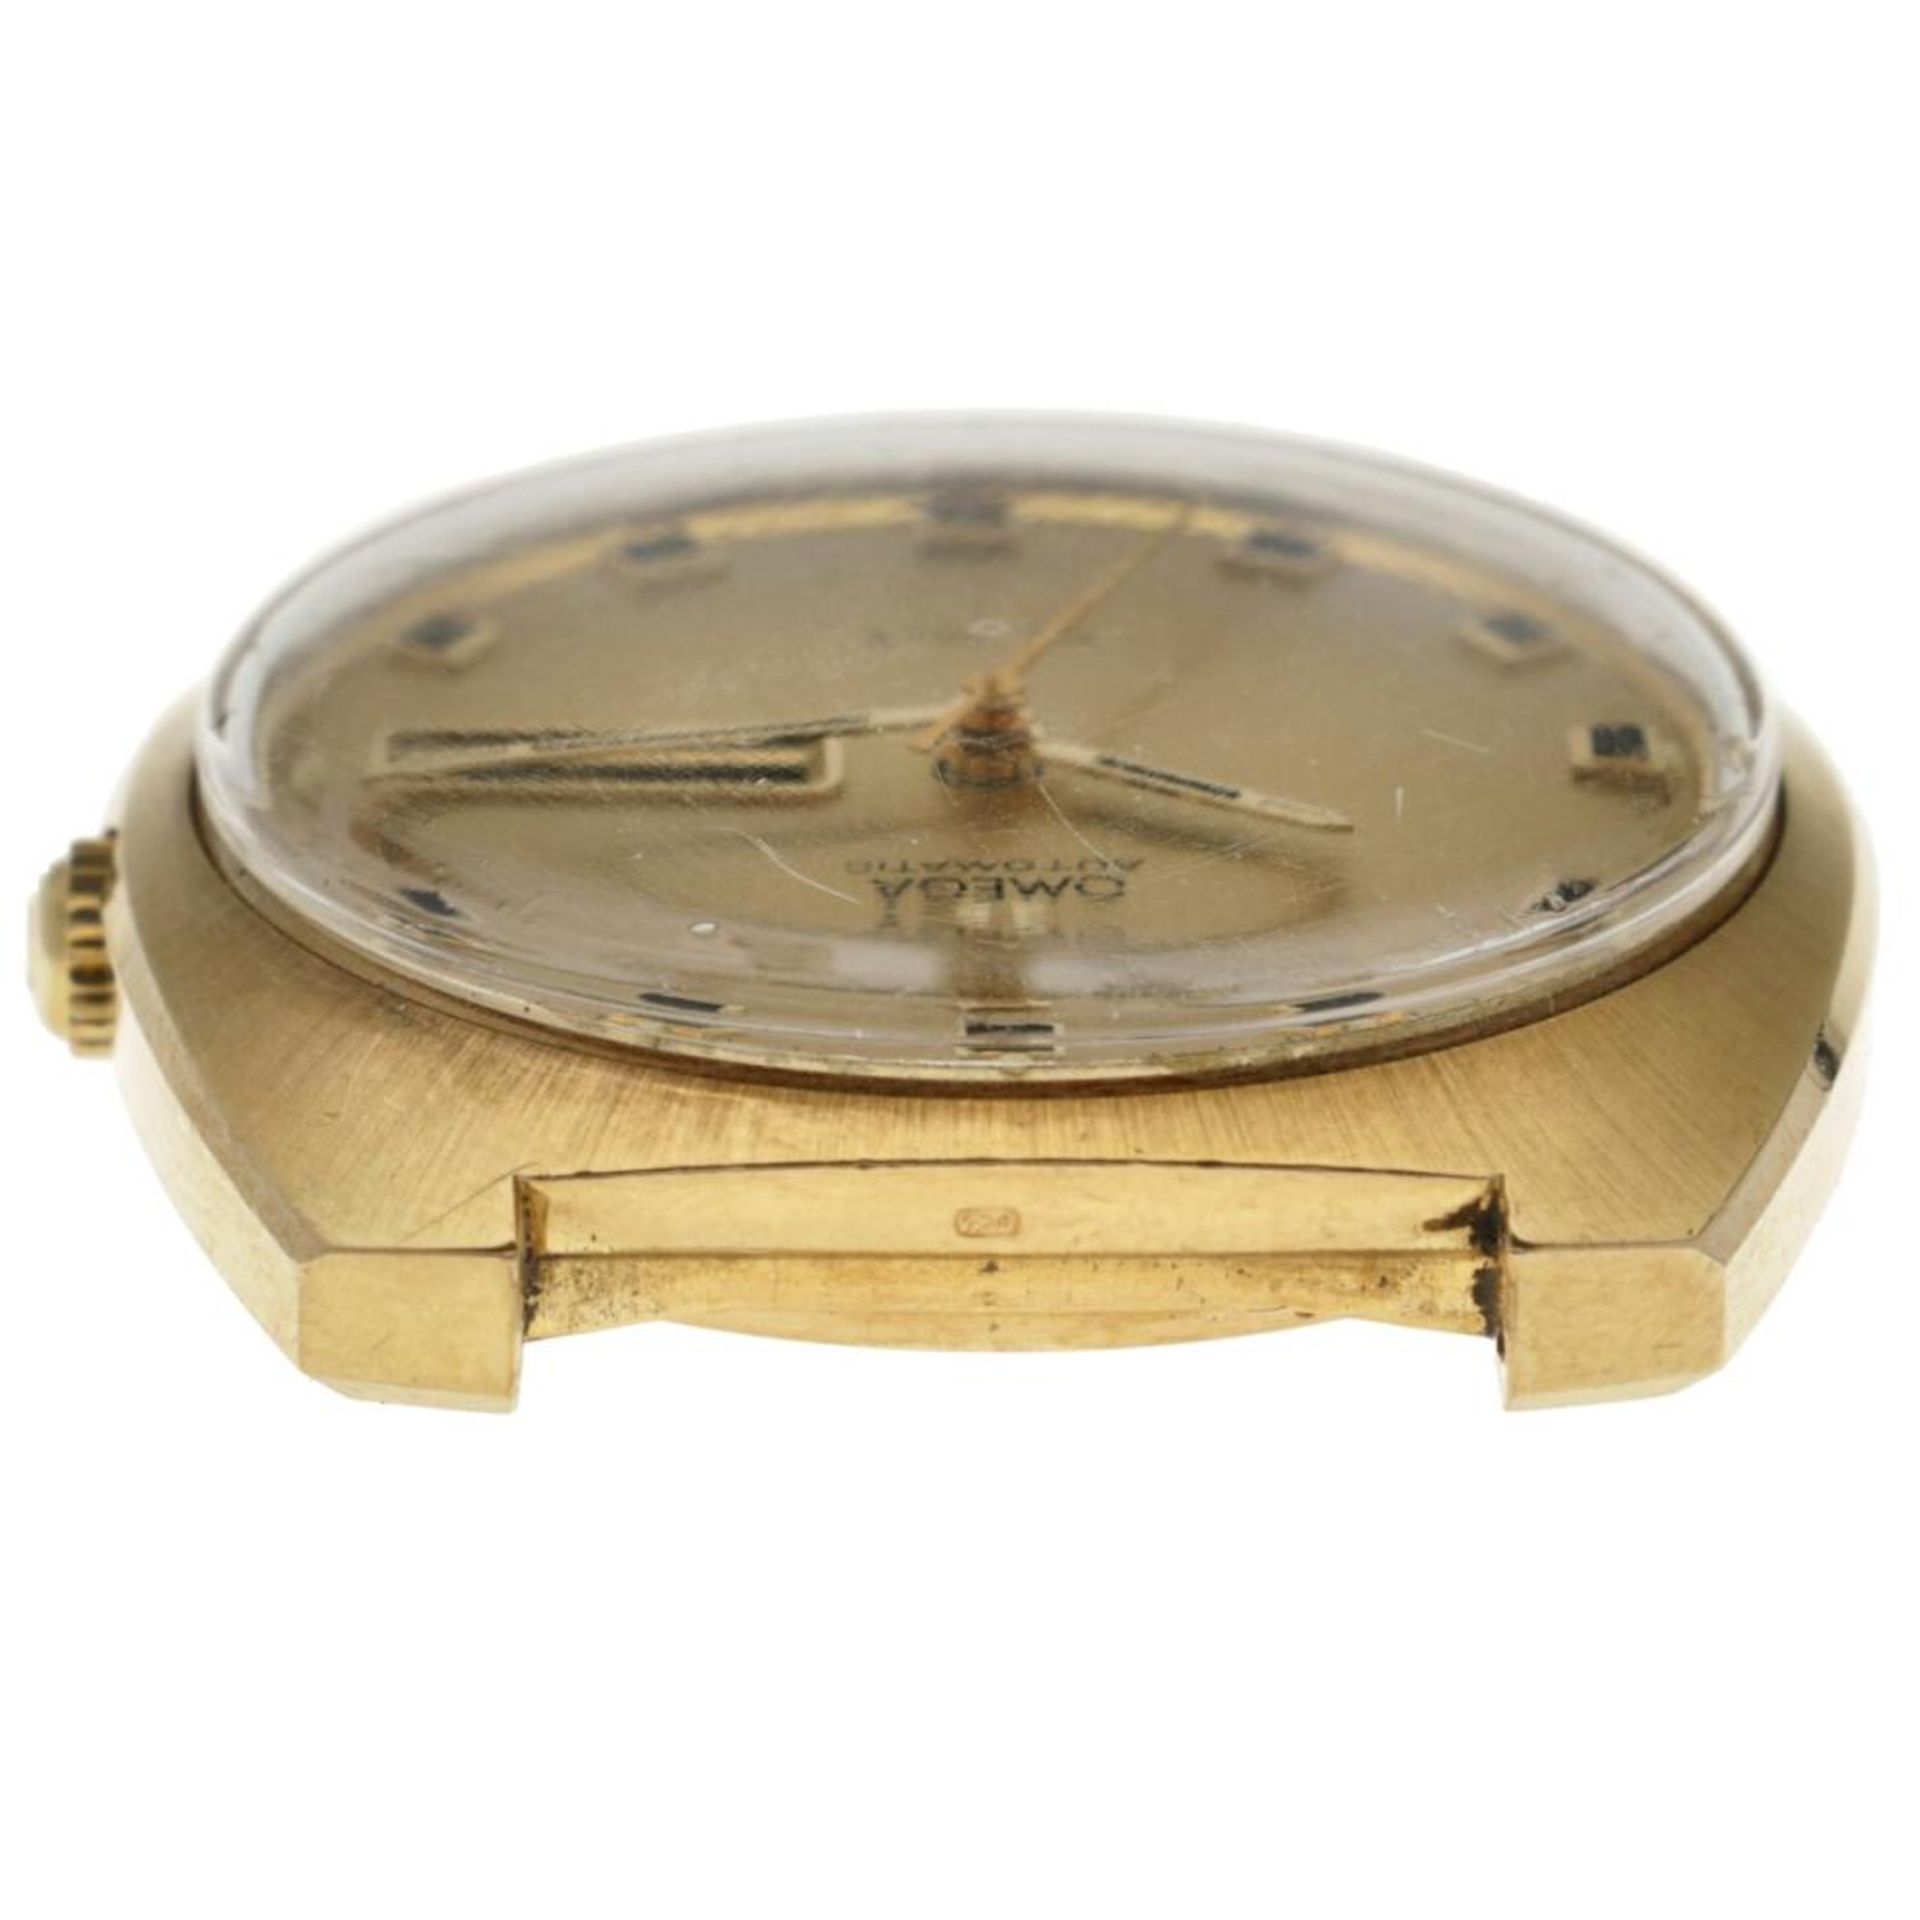 Omega De Ville - Men's watch - approx. 1970. - Image 6 of 6